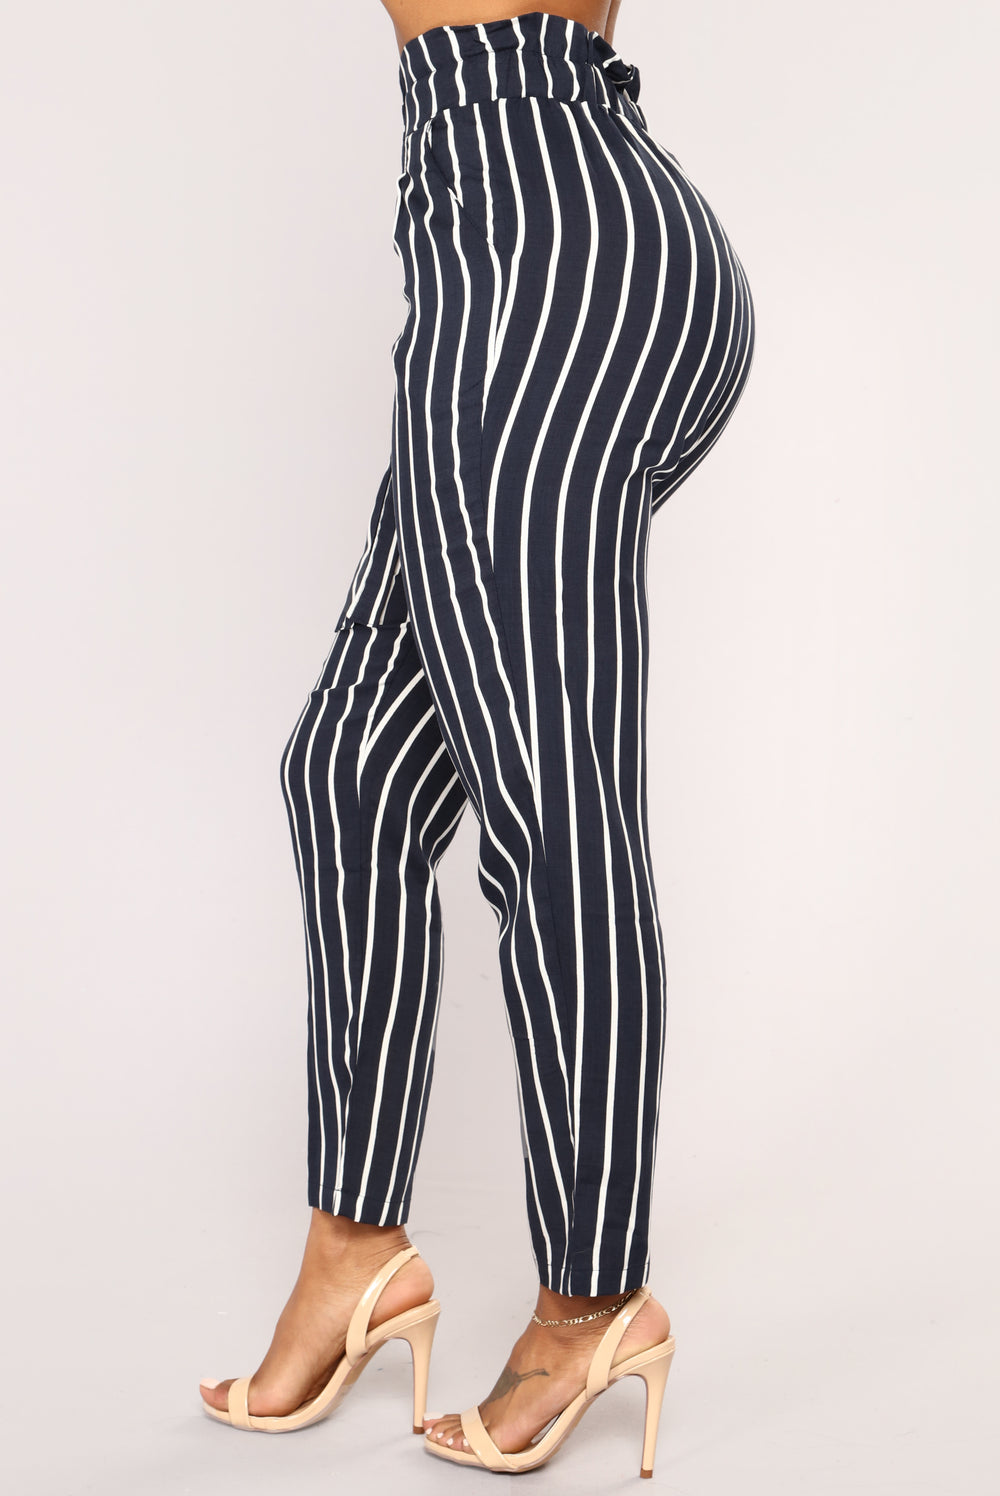 Jacklyn Stripe Pants - Navy/White